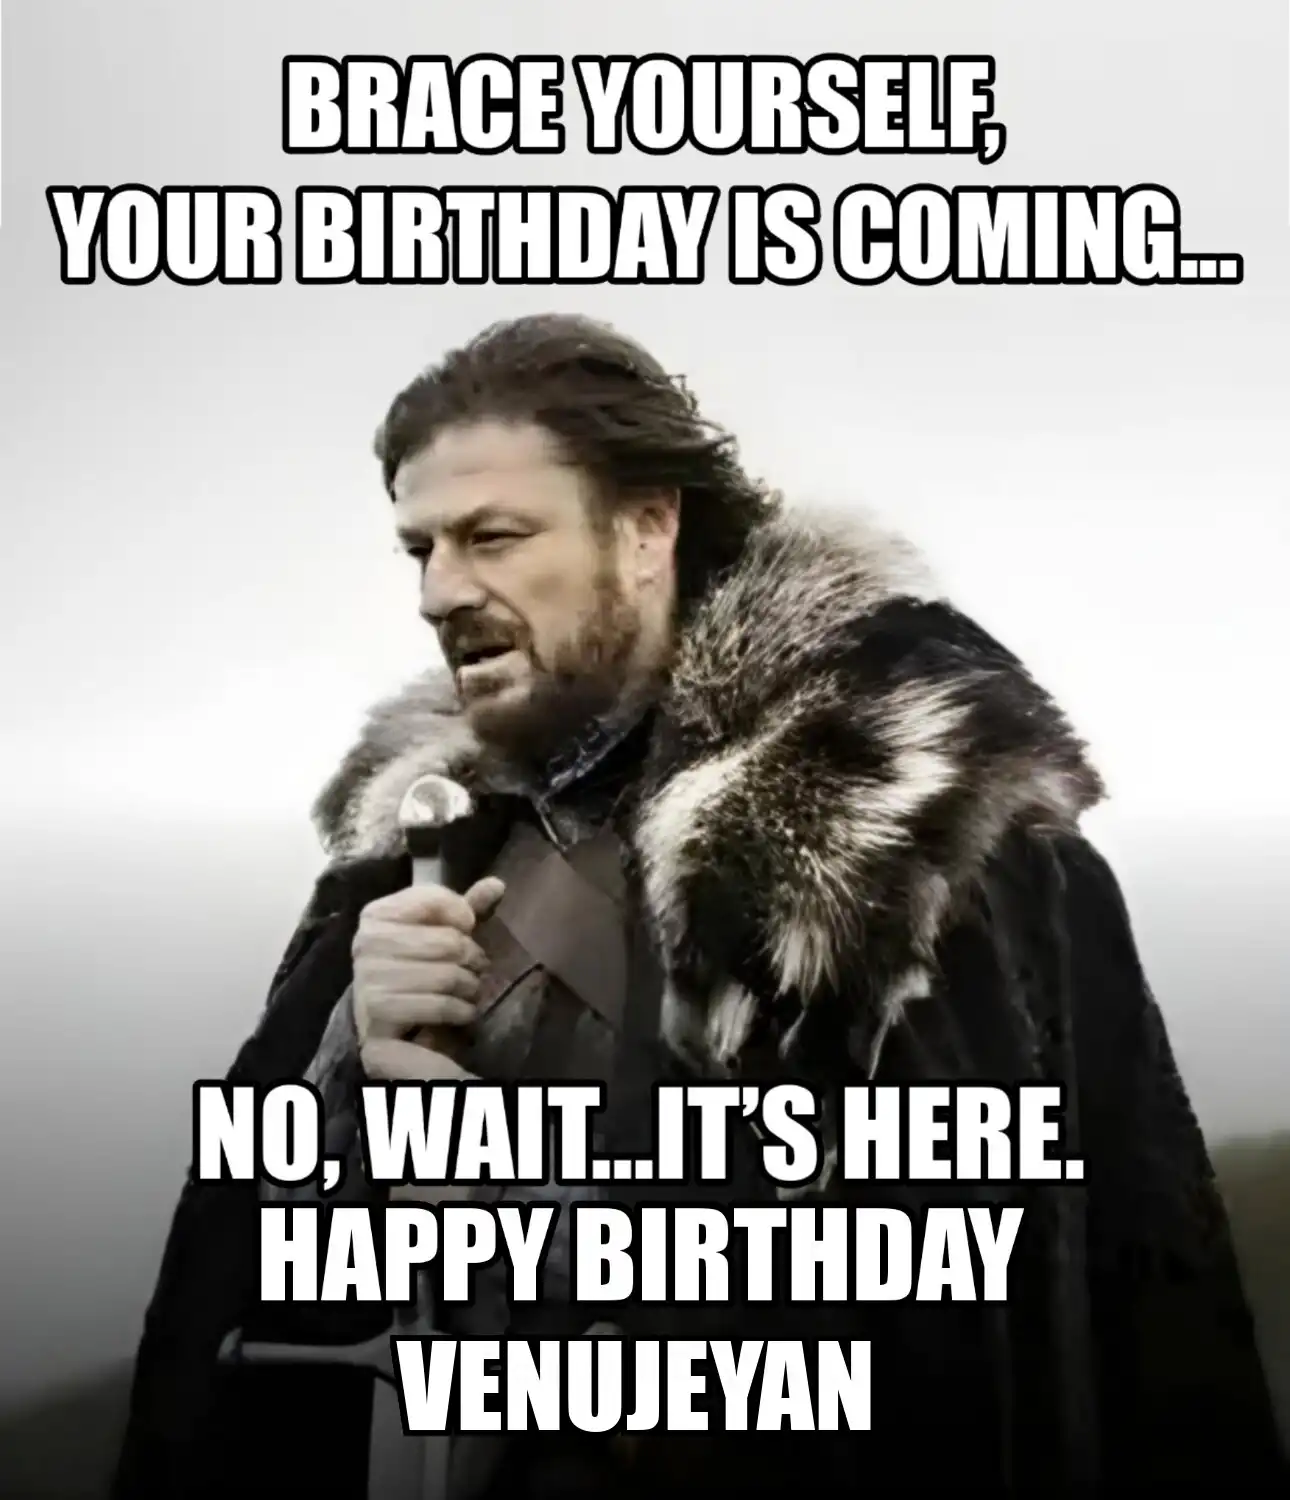 Happy Birthday Venujeyan Brace Yourself Your Birthday Is Coming Meme